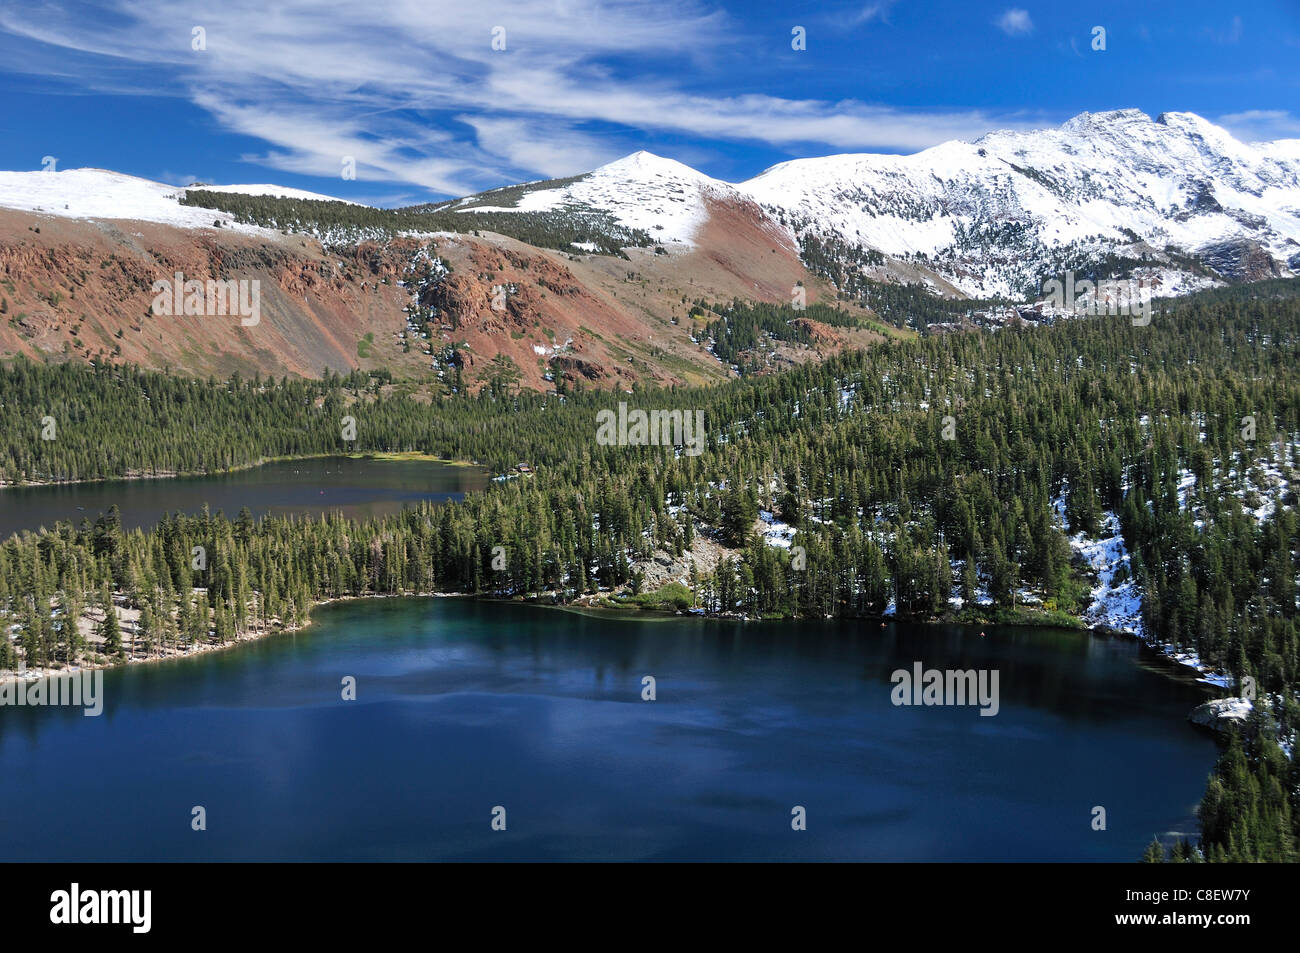 Crystal Lake, See, Berge, Sierra Nevada, Juni Seen Schleife, in der Nähe von Lee Vining, Kalifornien, USA, Amerika, Bäume, Stockfoto